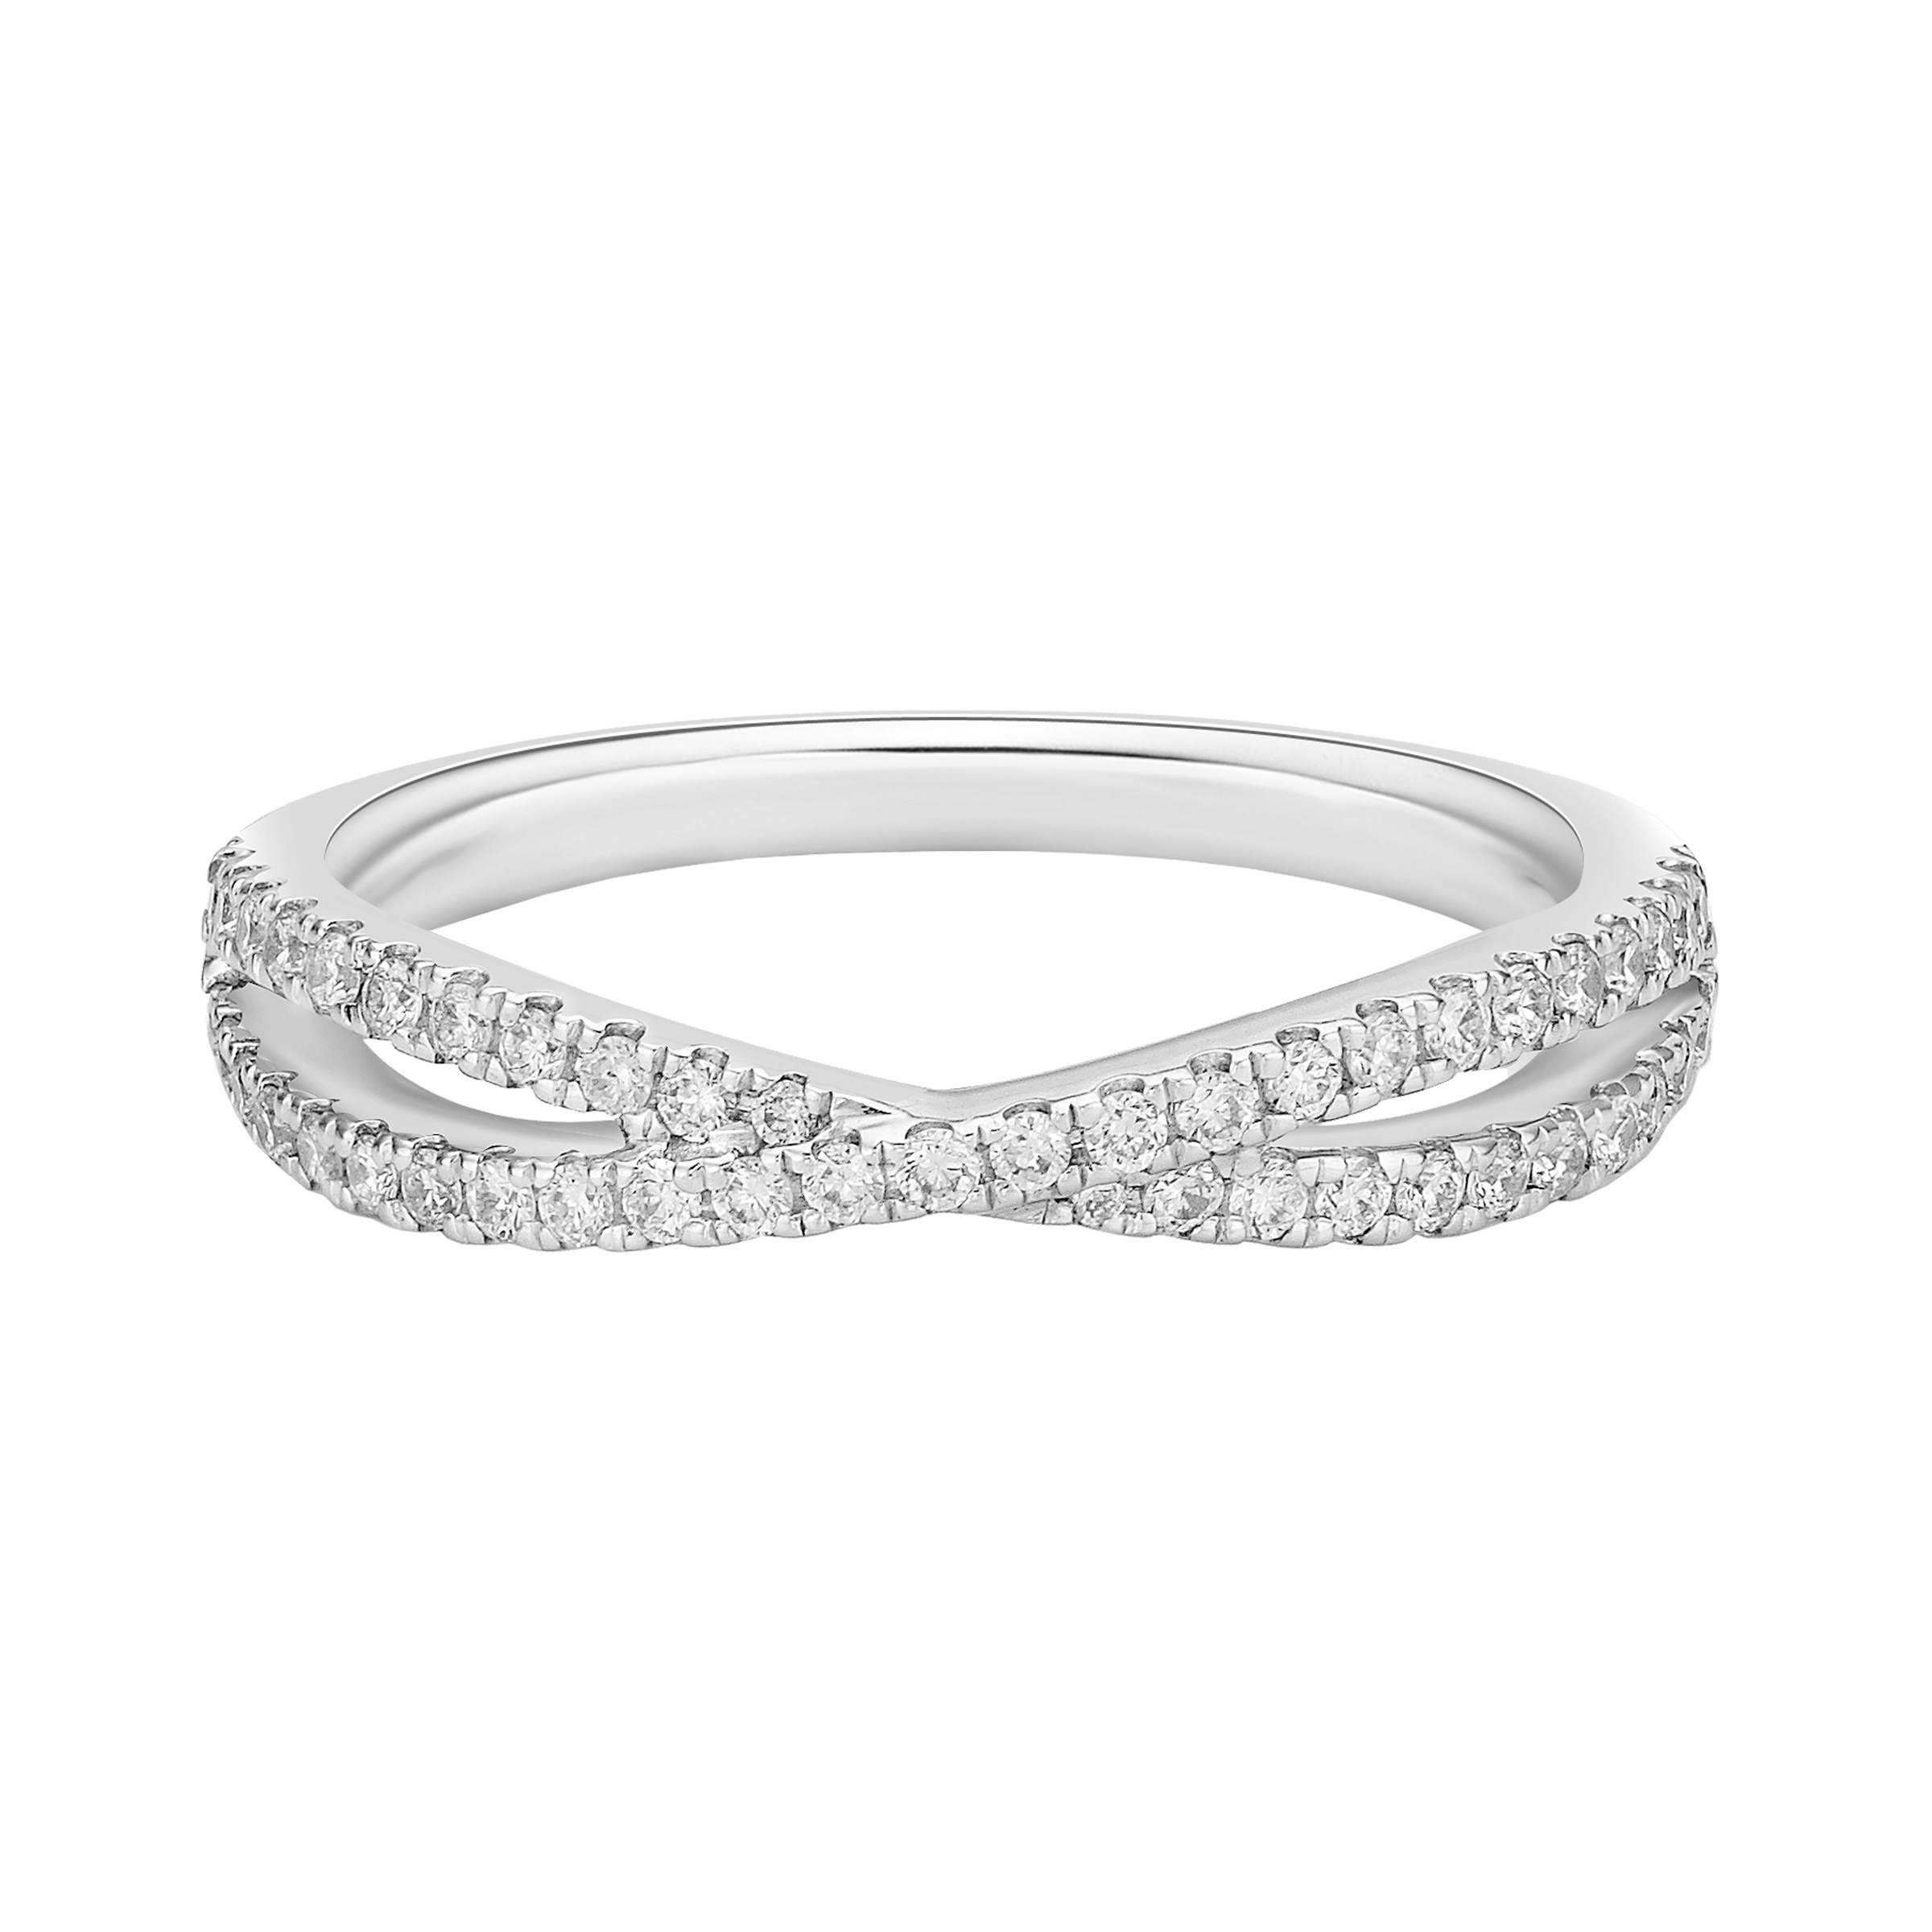 TWIST MICRO CLAW SET DIAMOND WEDDING ETERNITY RING